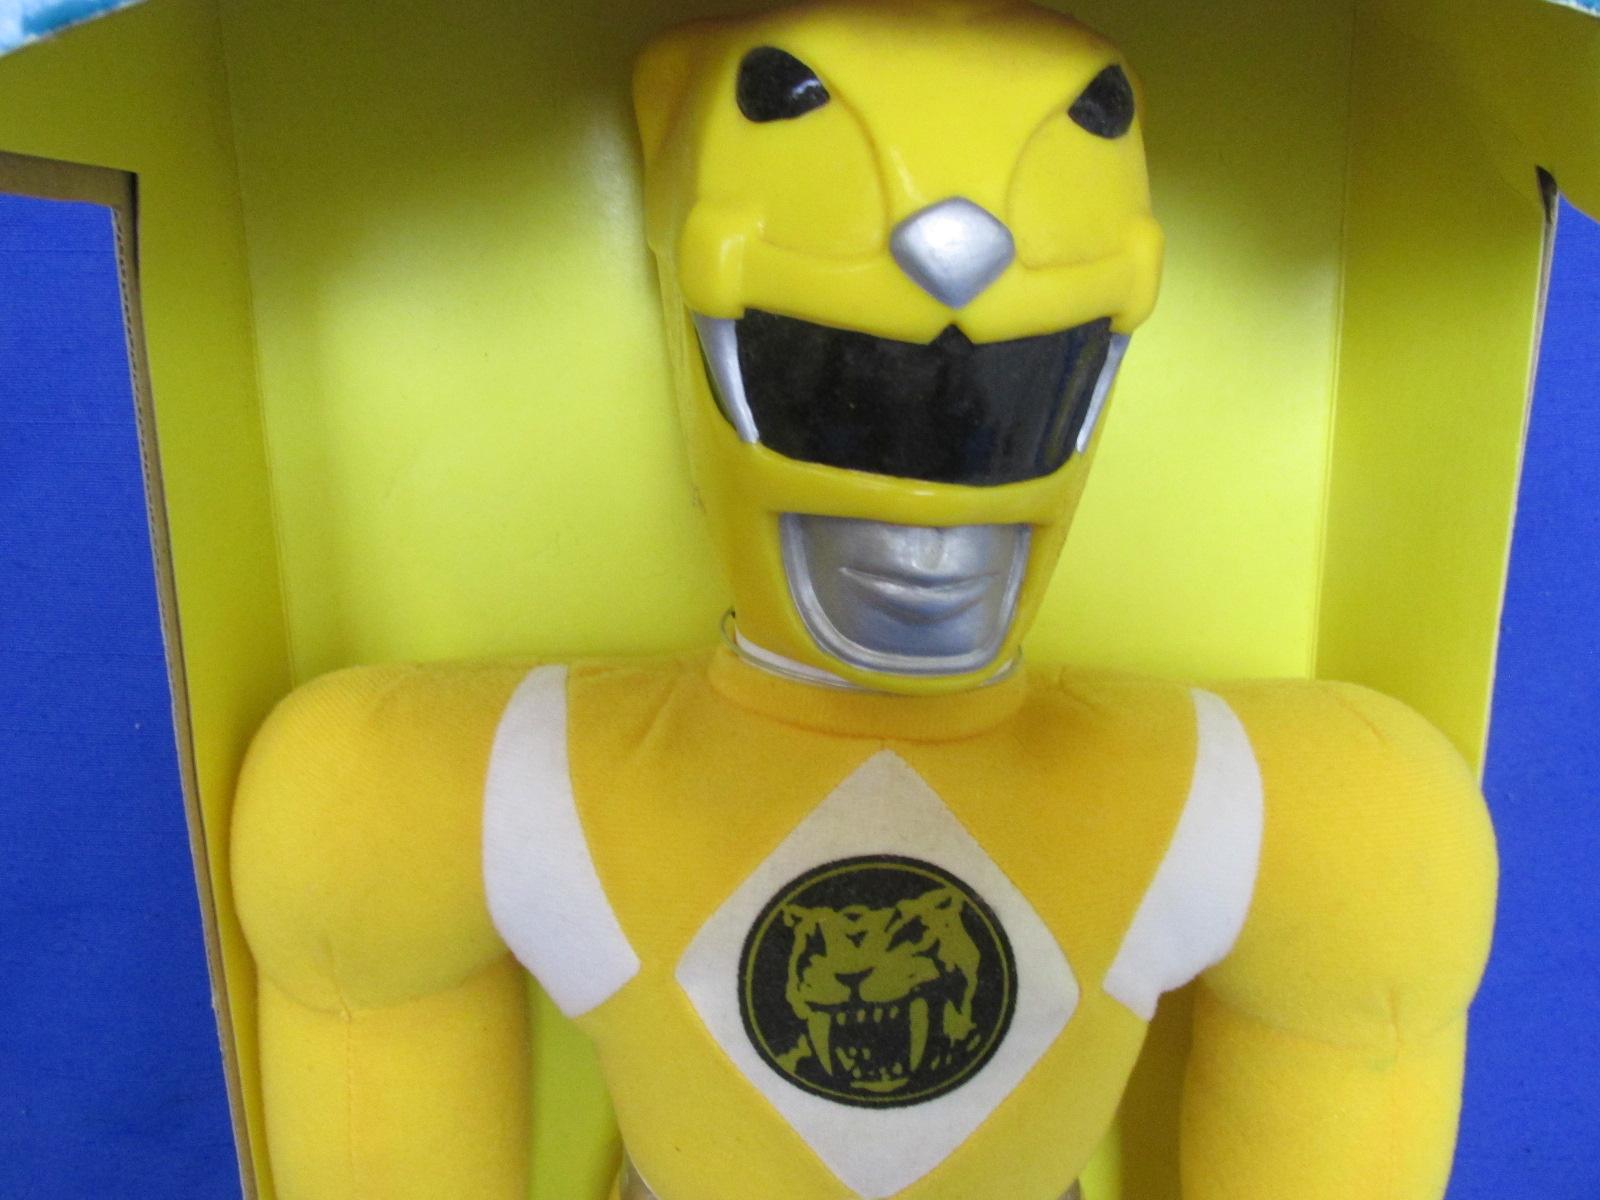 Mighty Morphin Power Rangers Plush Toy “Action Pal”  NIB – Yellow